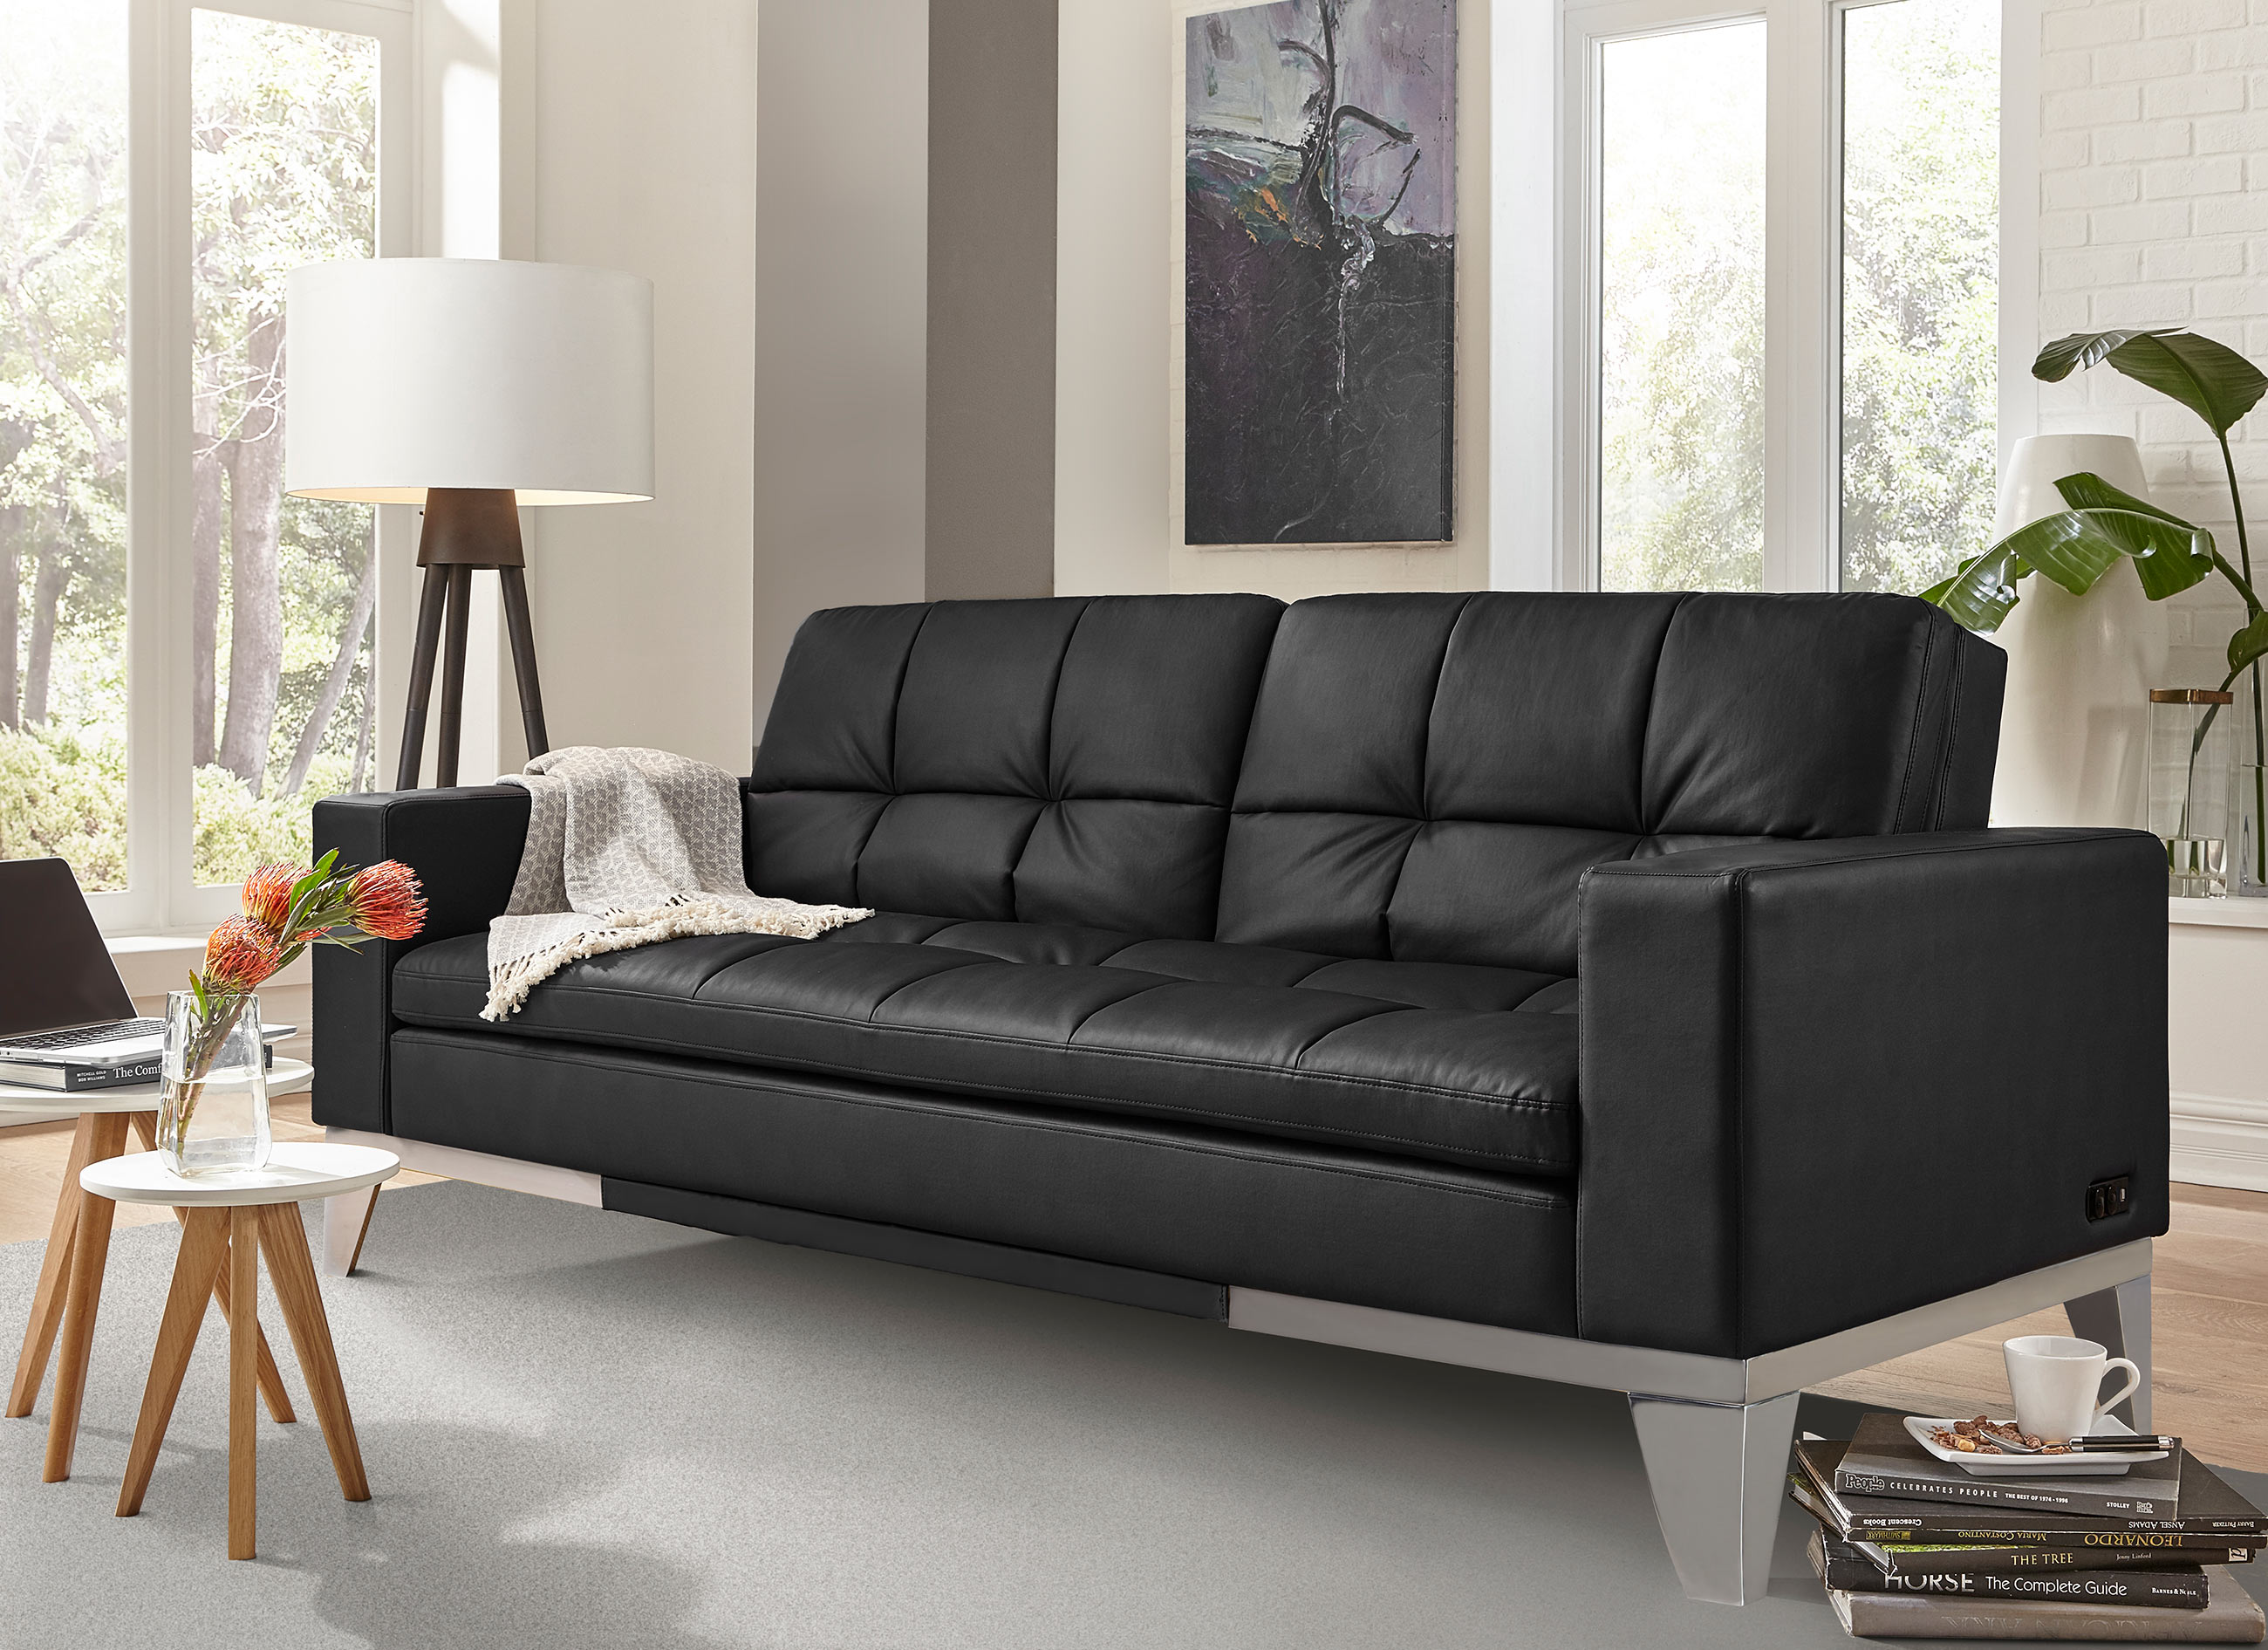 Westridge Convertible Sofa Black by Serta Lifestyle